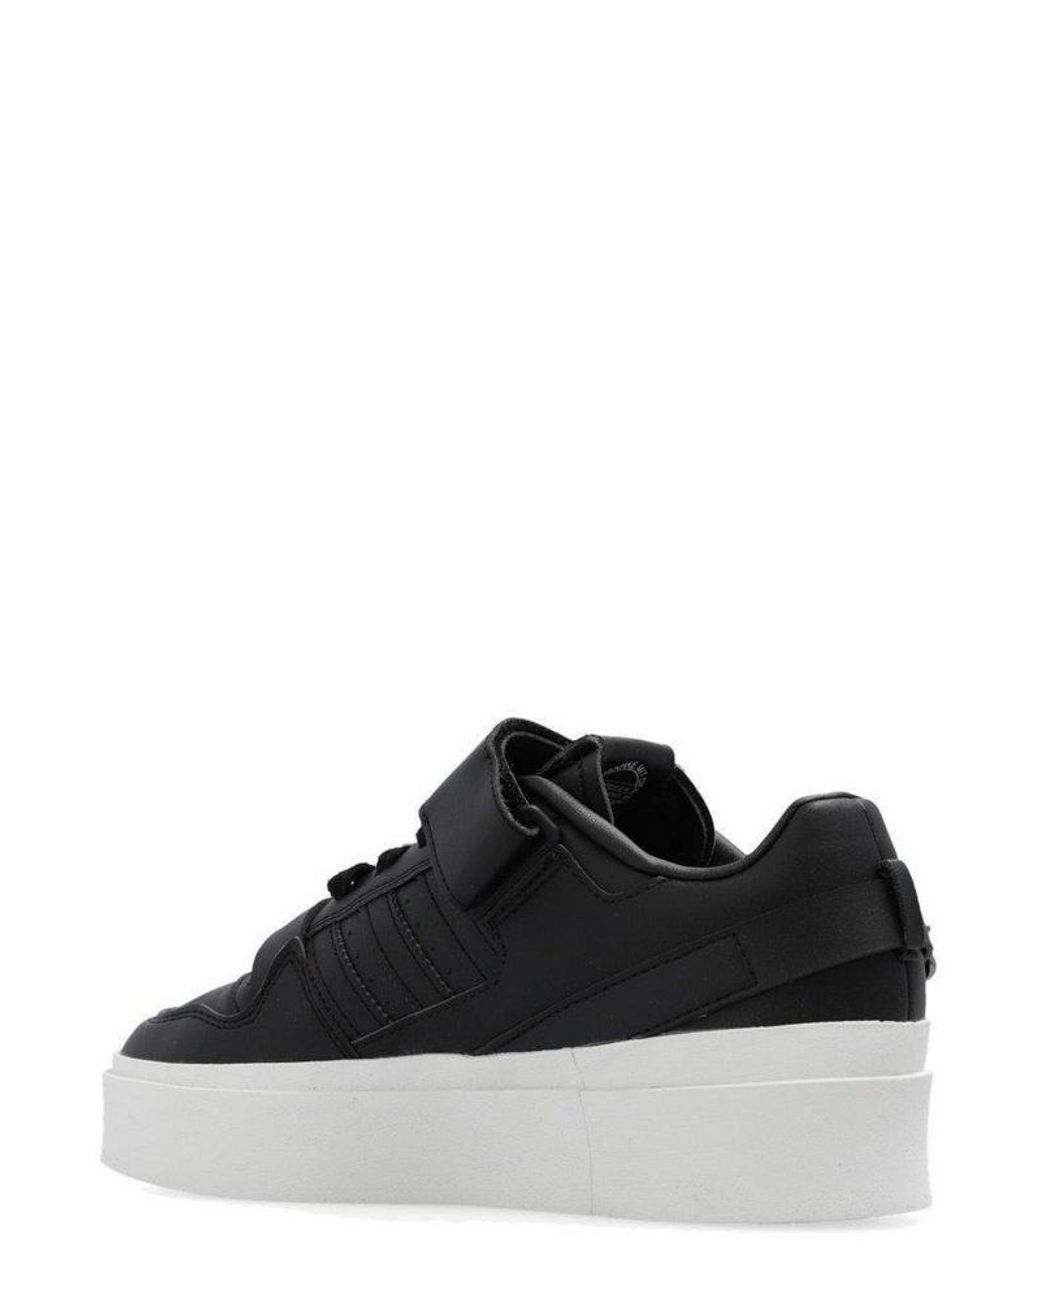 adidas Originals Forum Bonega Touch-strap Fastened Sneakers in Black | Lyst